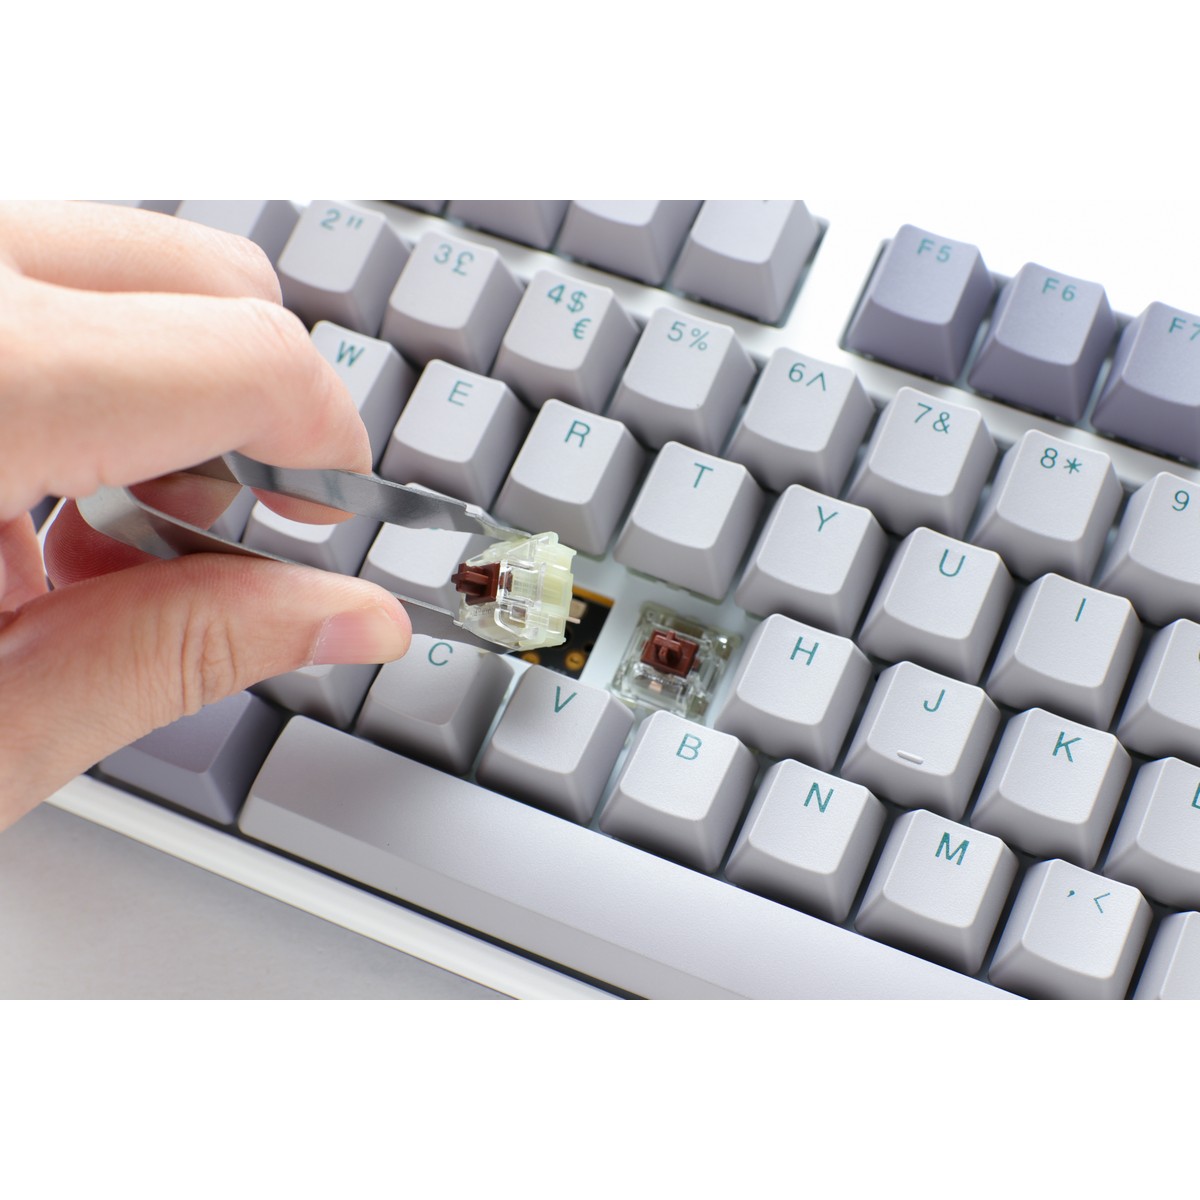 Ducky - Ducky One 3 Mist TKL 80% USB RGB Mechanical Gaming Keyboard Cherry MX Speed Silver Switch - UK Layout